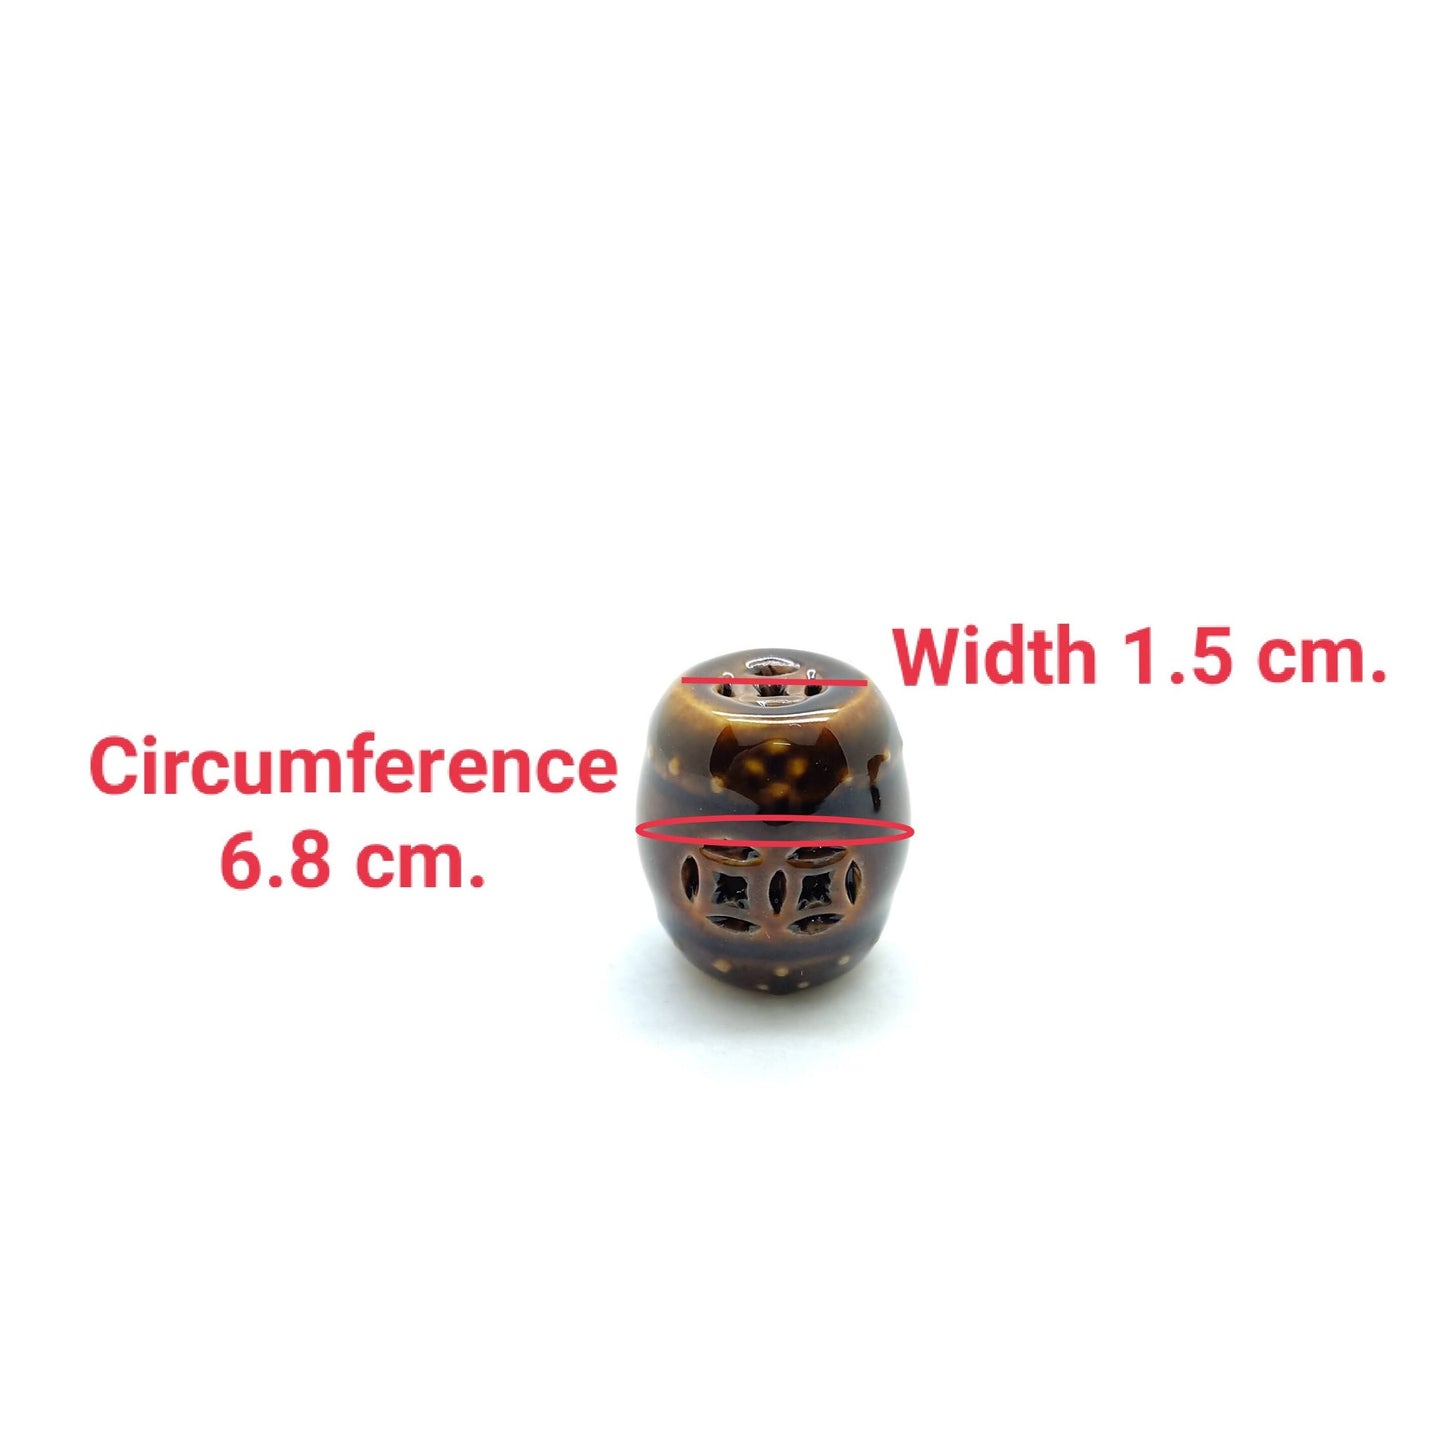 2 Ceramic Chinese Garden Stools | 2.5 cm. Tall